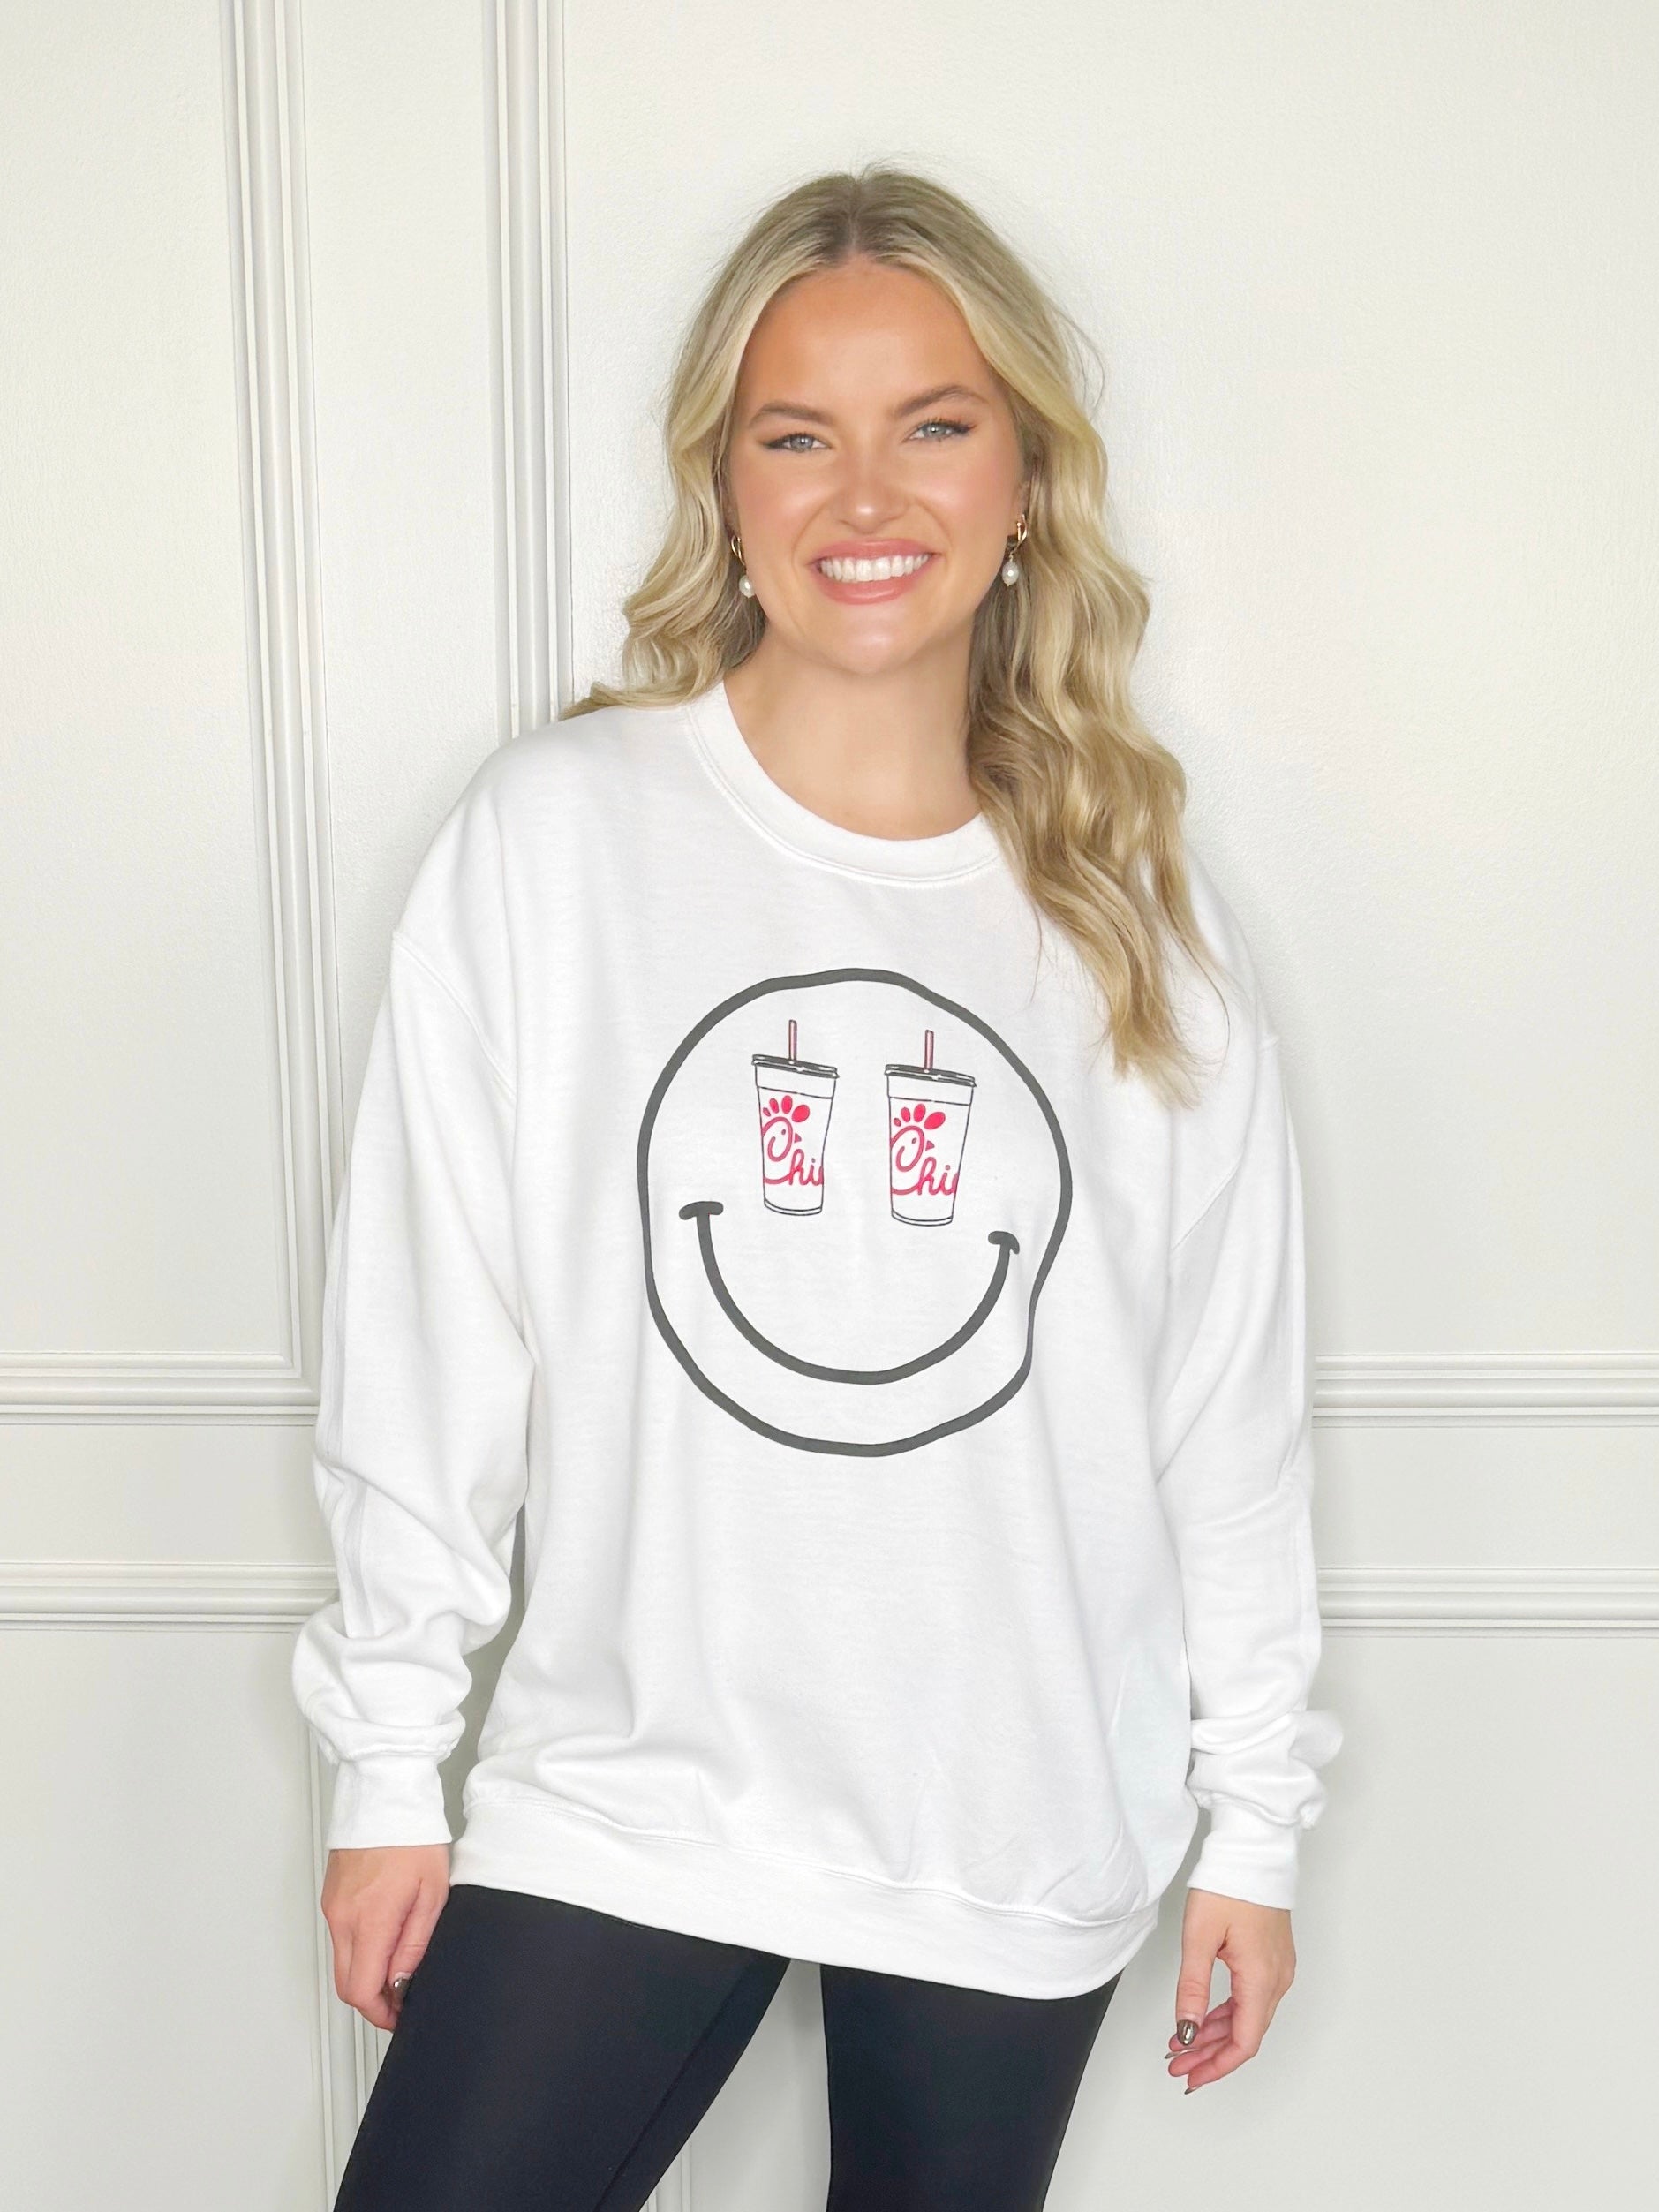 Puff Smiley Chick-Fil-A Sweatshirt